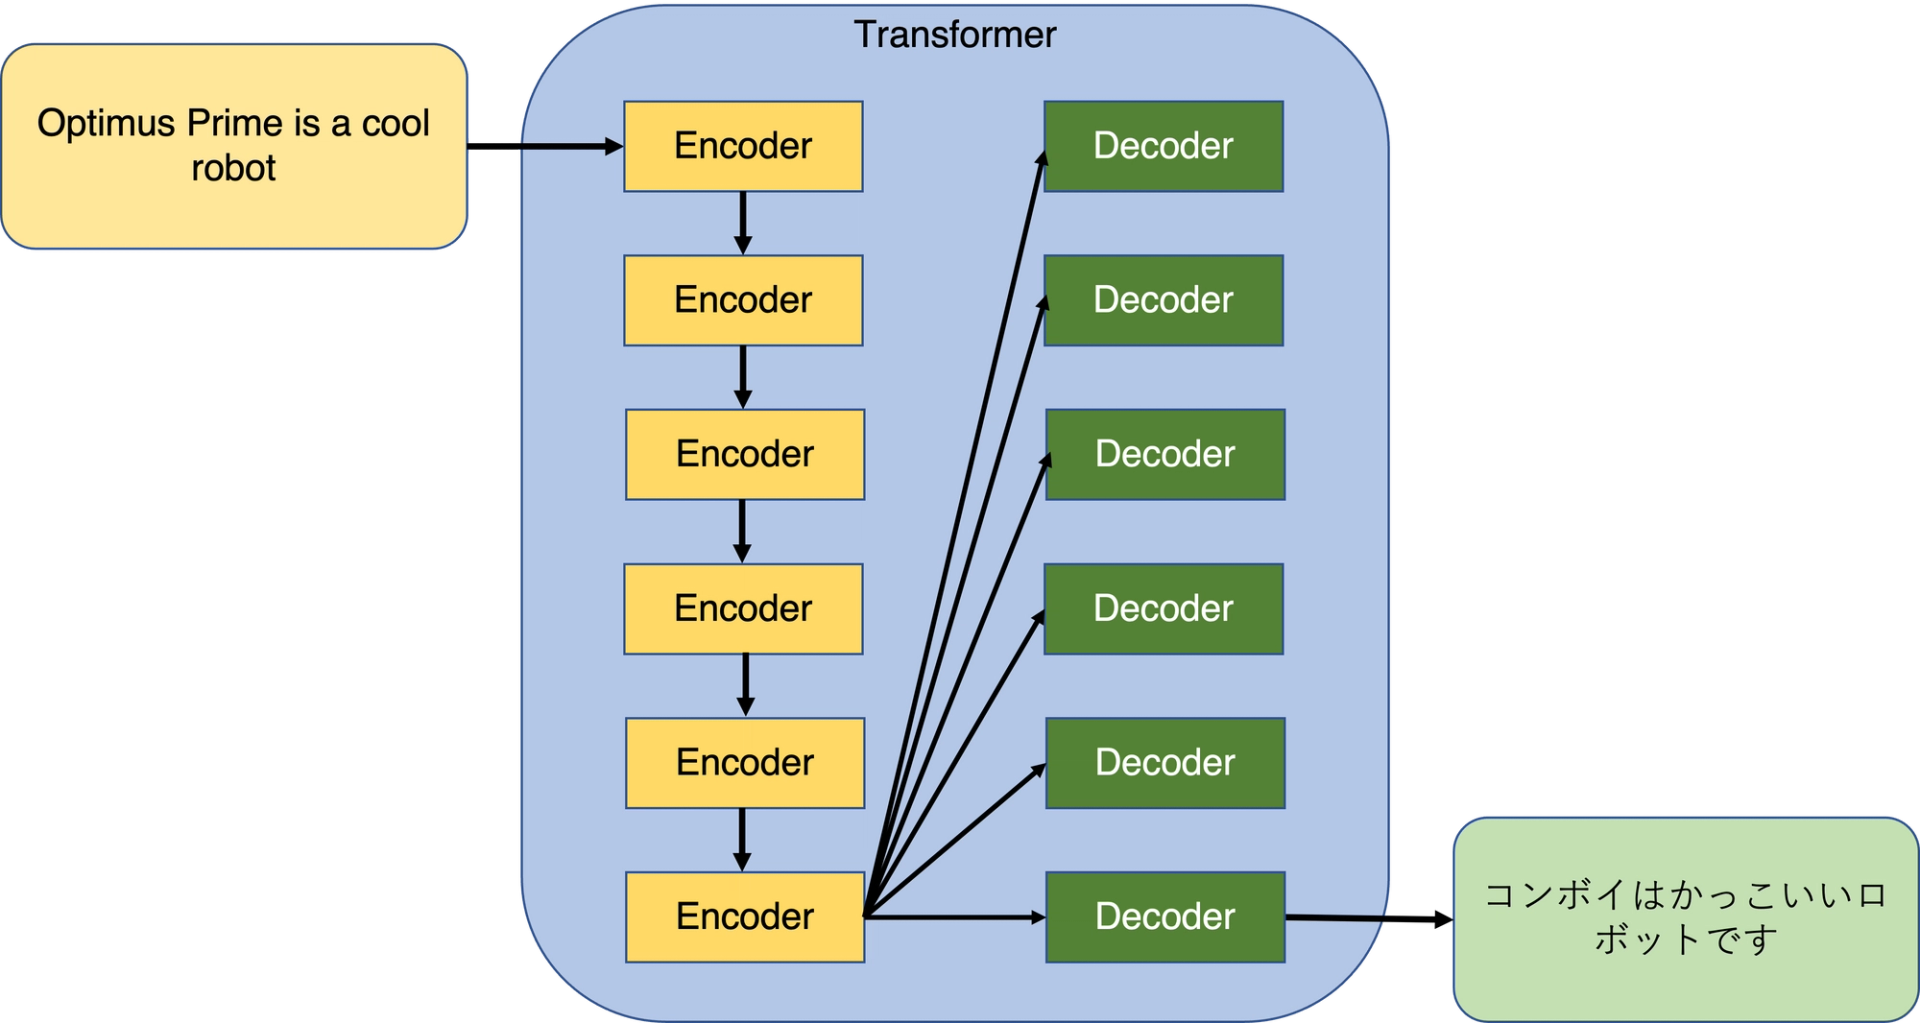 Series of encoders and decoders in a transformer model